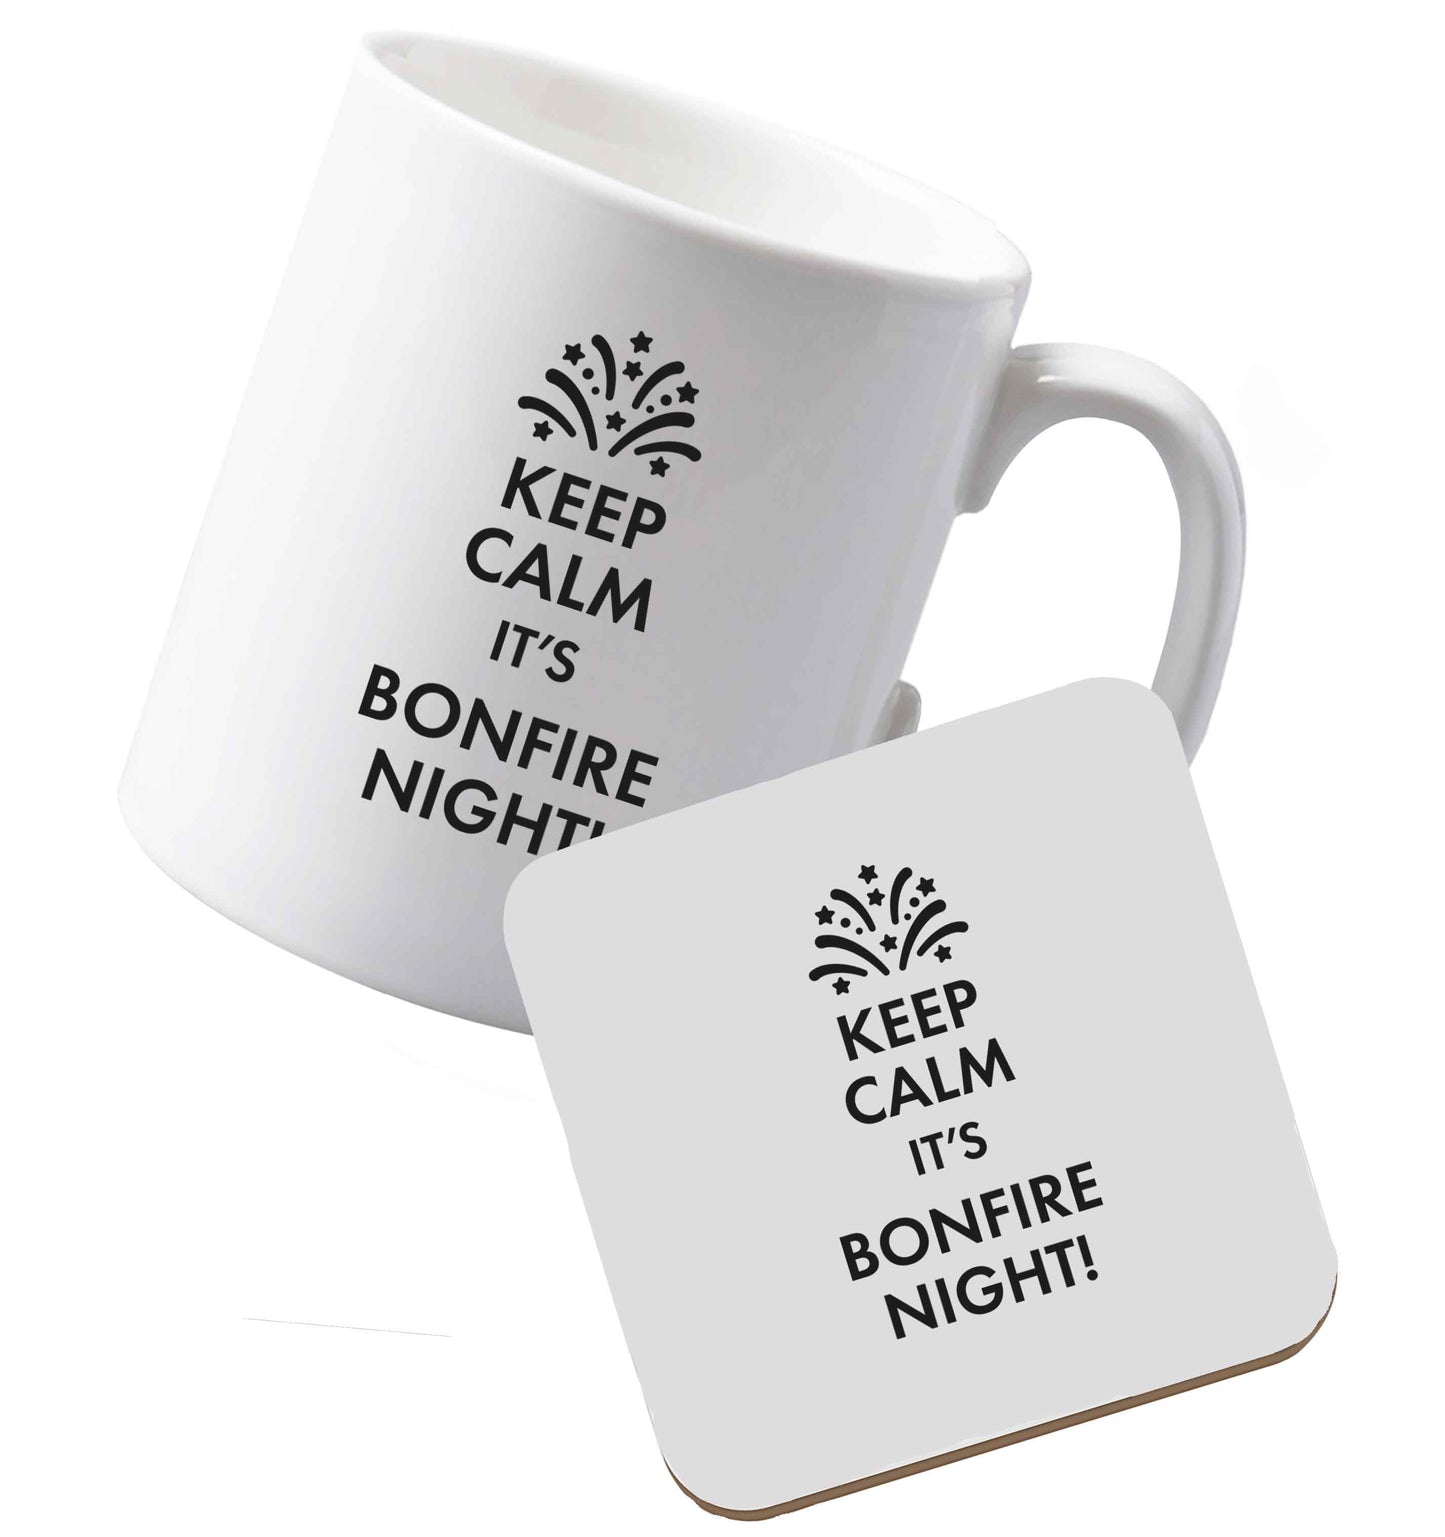 10 oz Ceramic mug and coaster Keep calm its bonfire night both sides